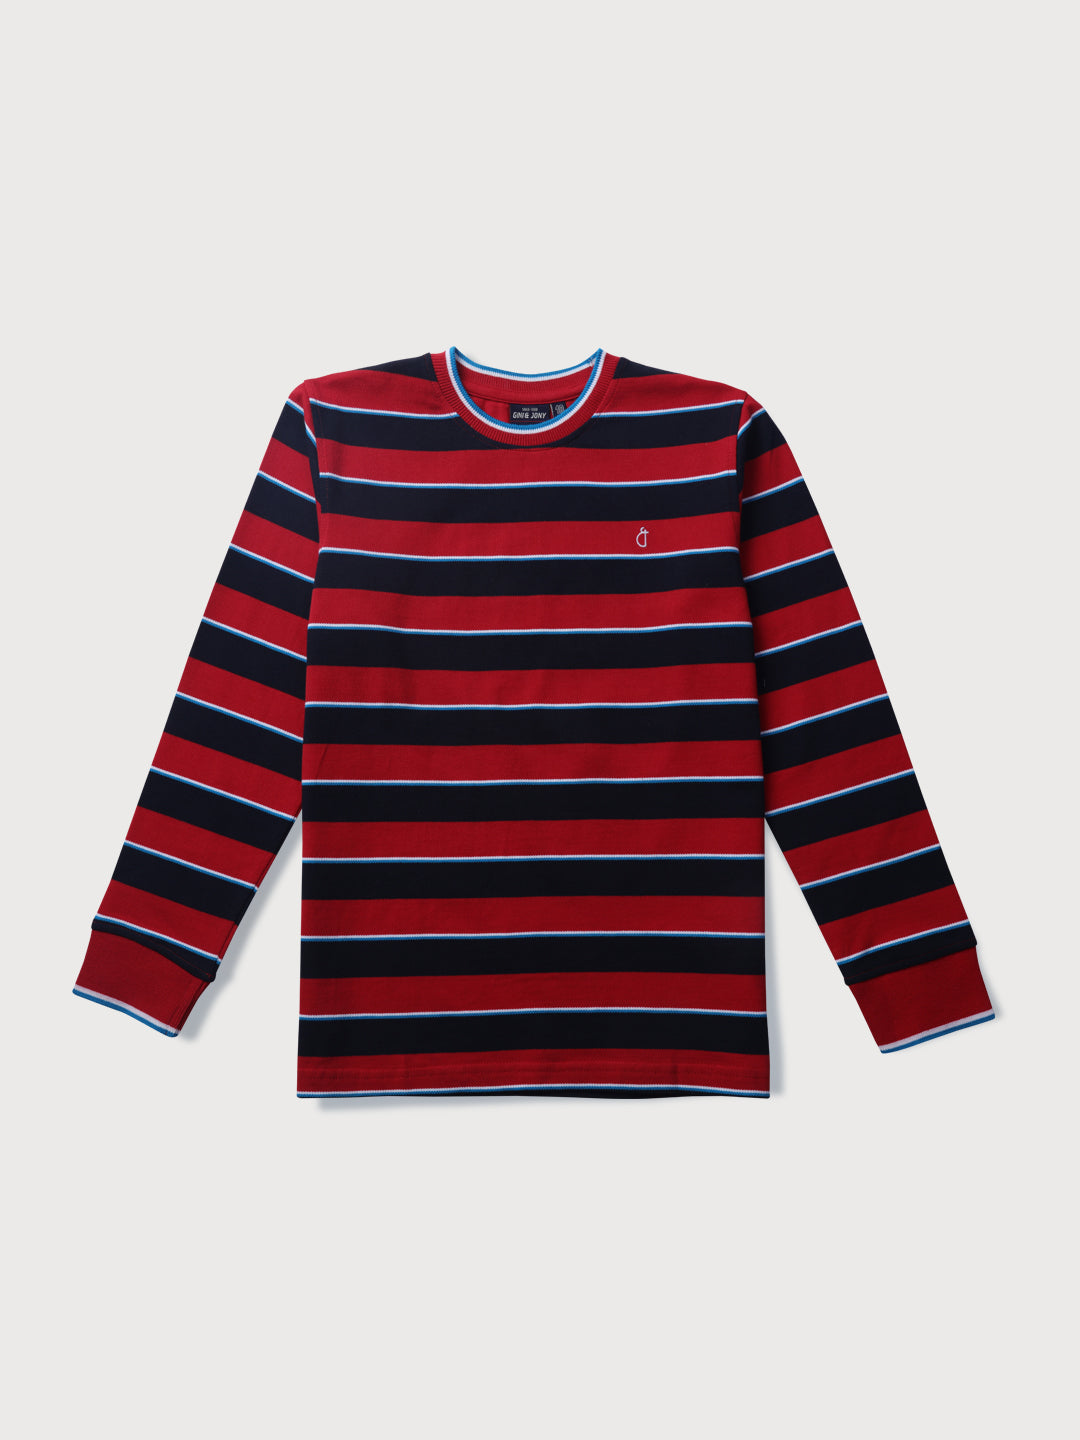 Boys Red Striped Knits T-Shirt